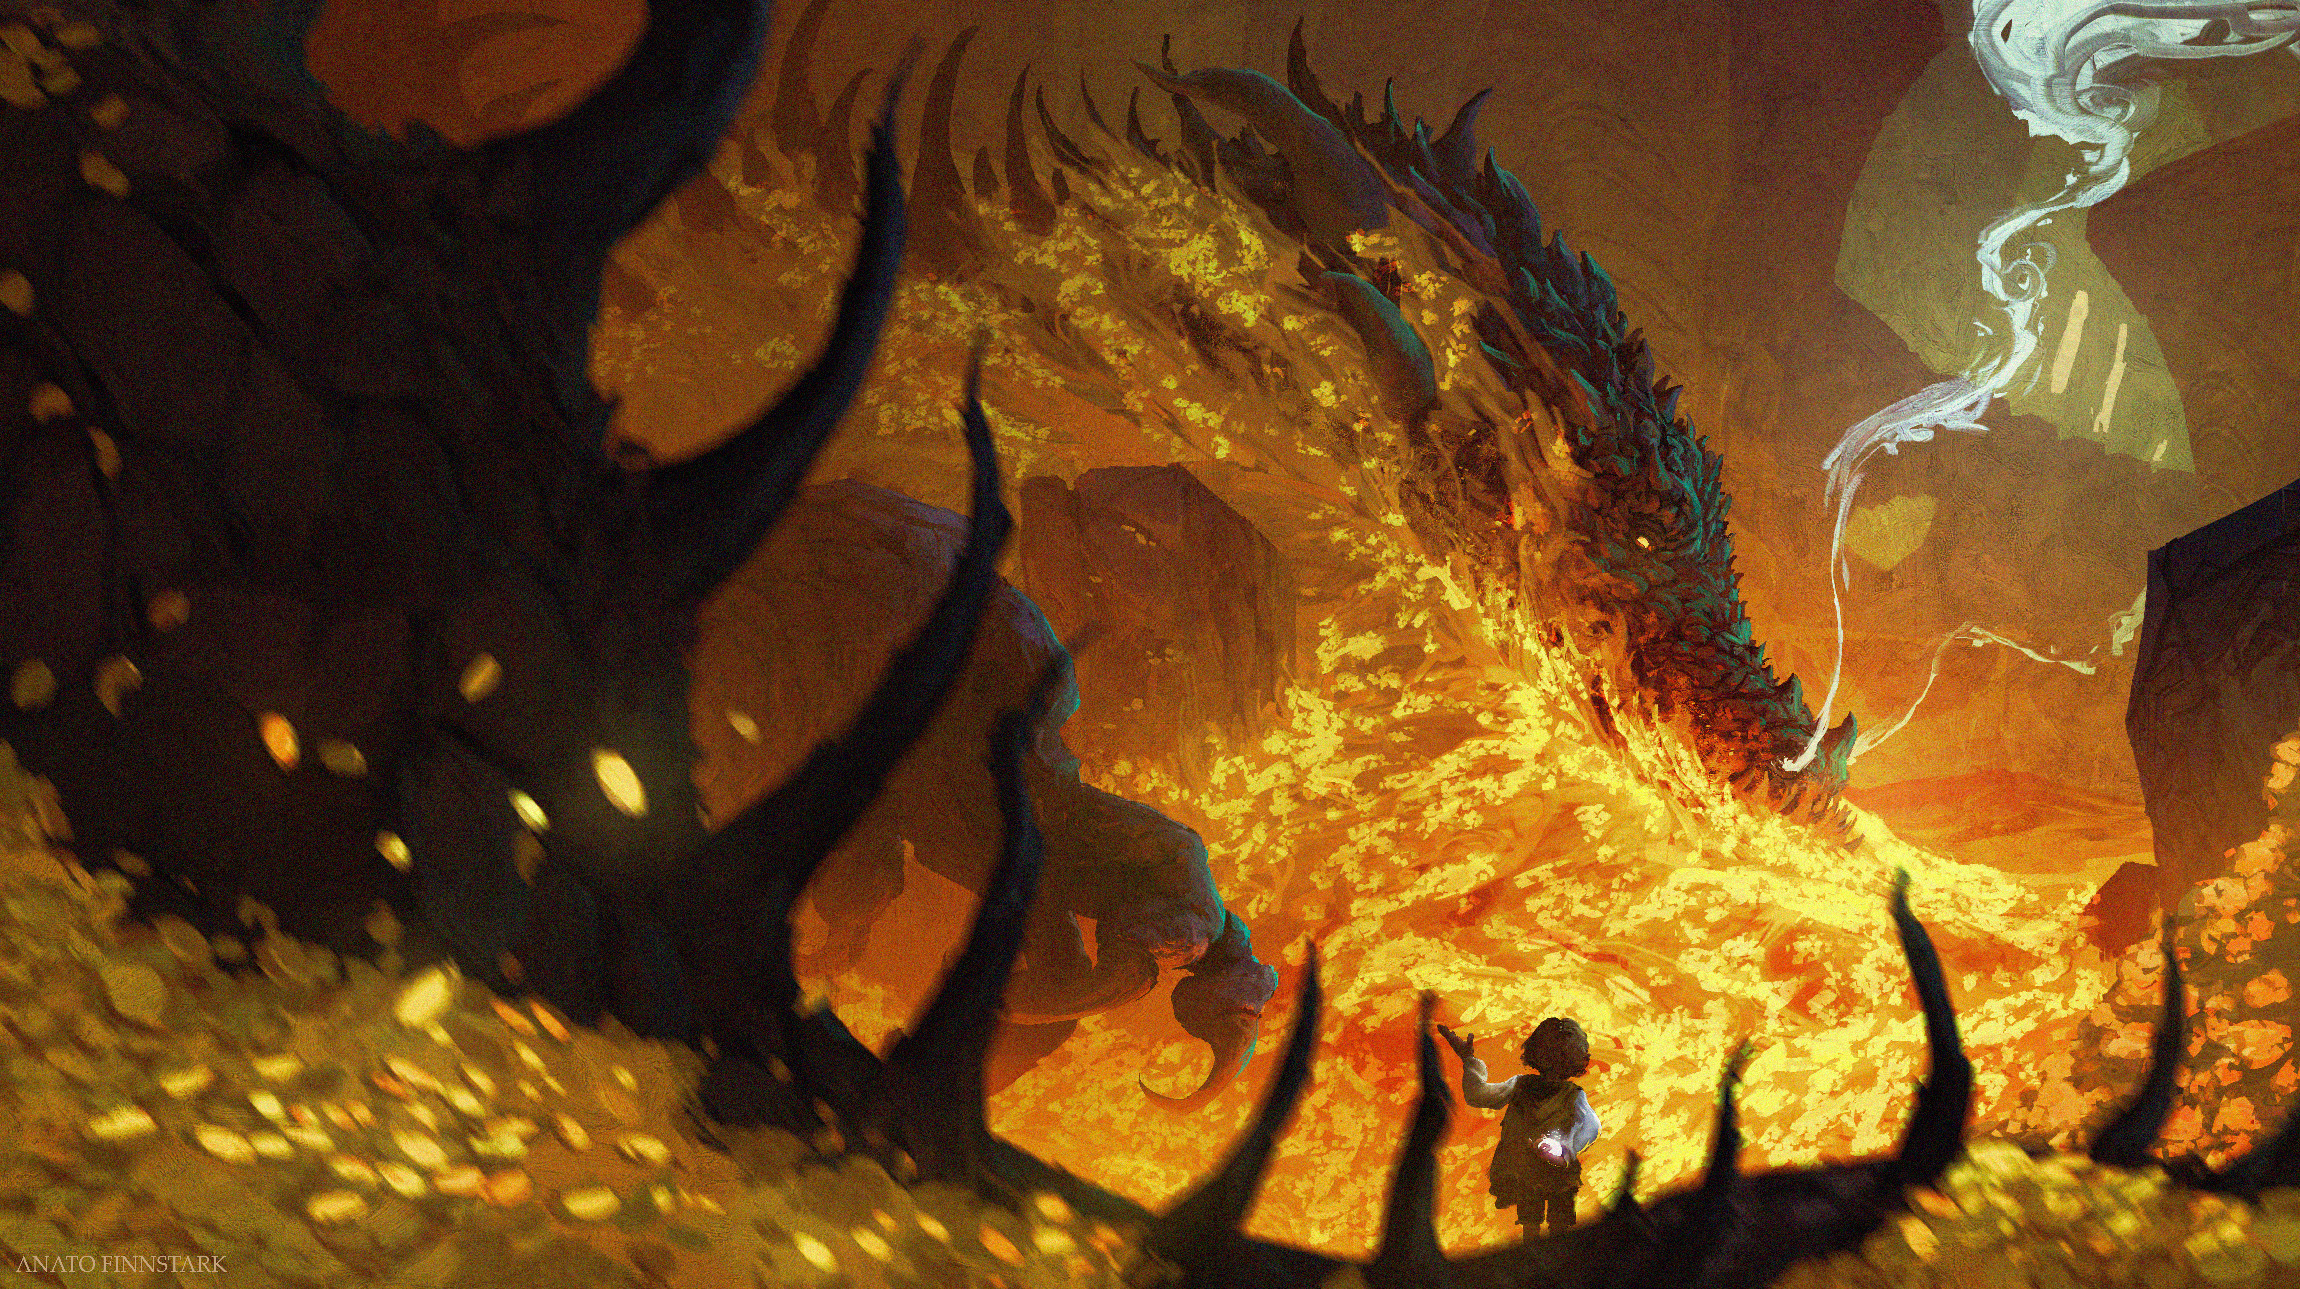 Smoke Dragon Gold The Hobbit Smaug Wings Coins Digital Art Fantasy Art J R R Tolkien 2300x1289